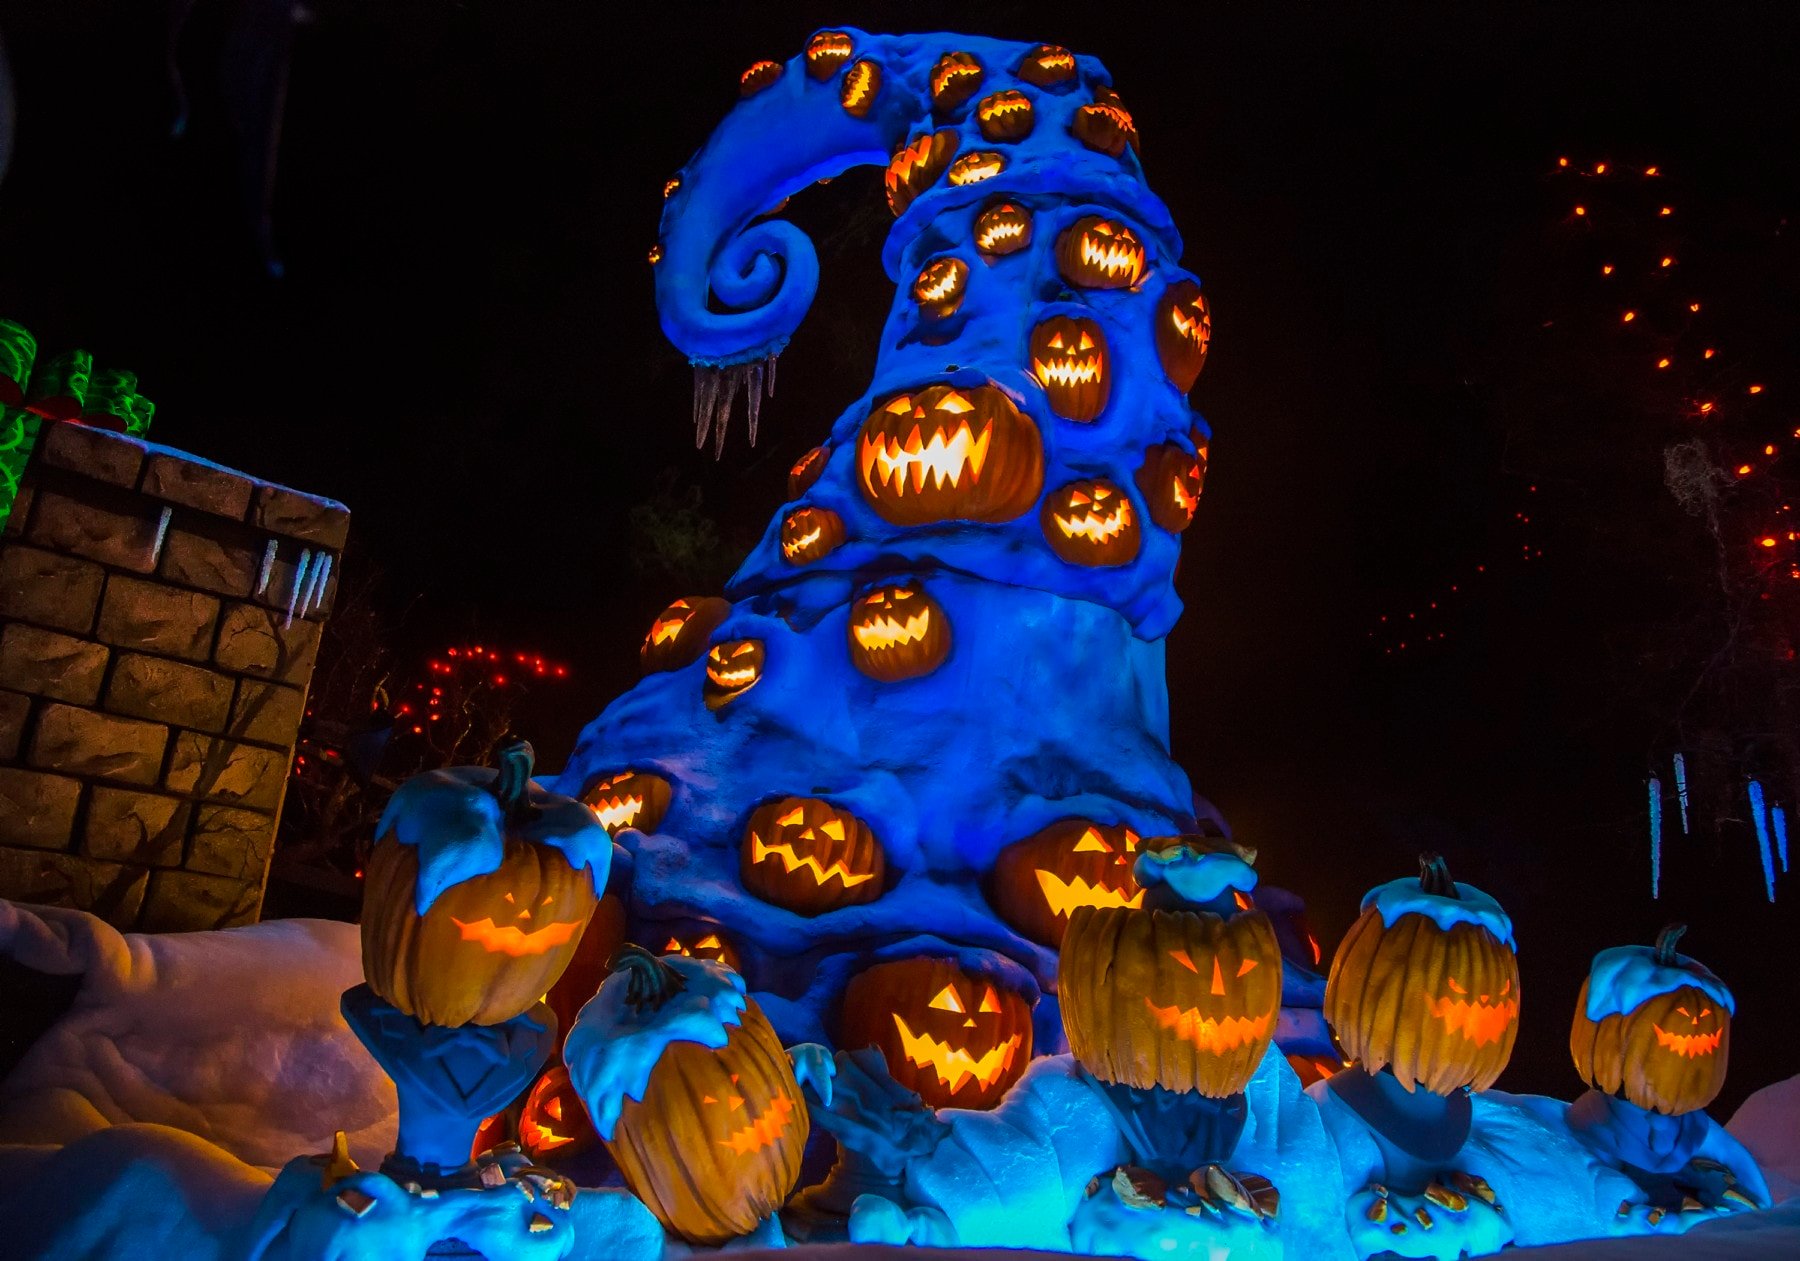 A pile of pumpkins at Disneyland during Halloween.